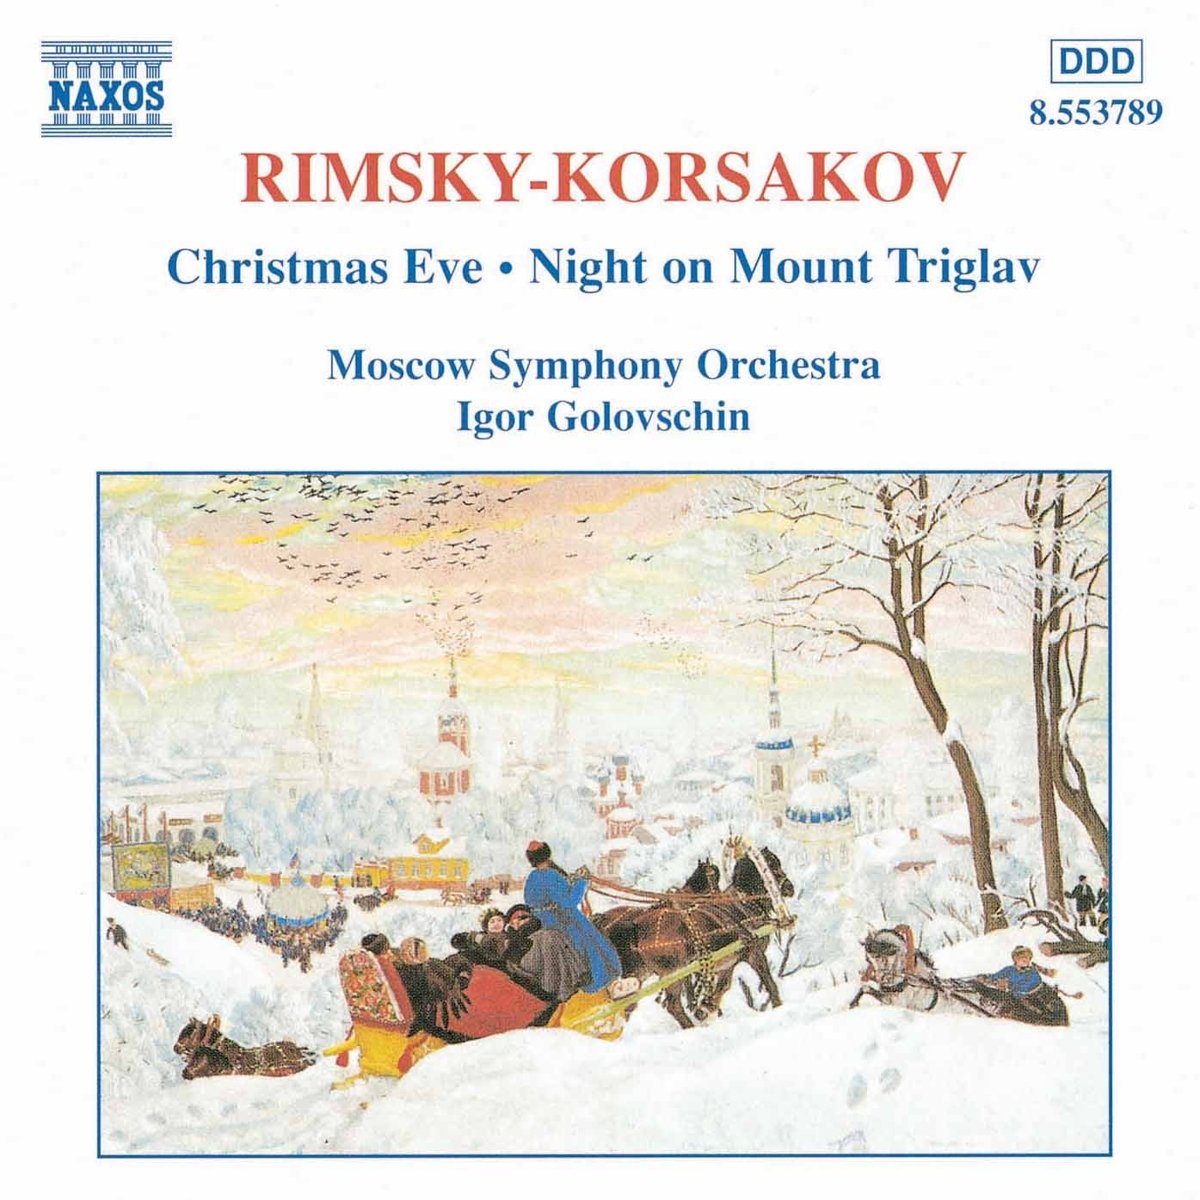 RIMSKY-KORSAKOV: Christmas Eve; Night on Mount Triglav